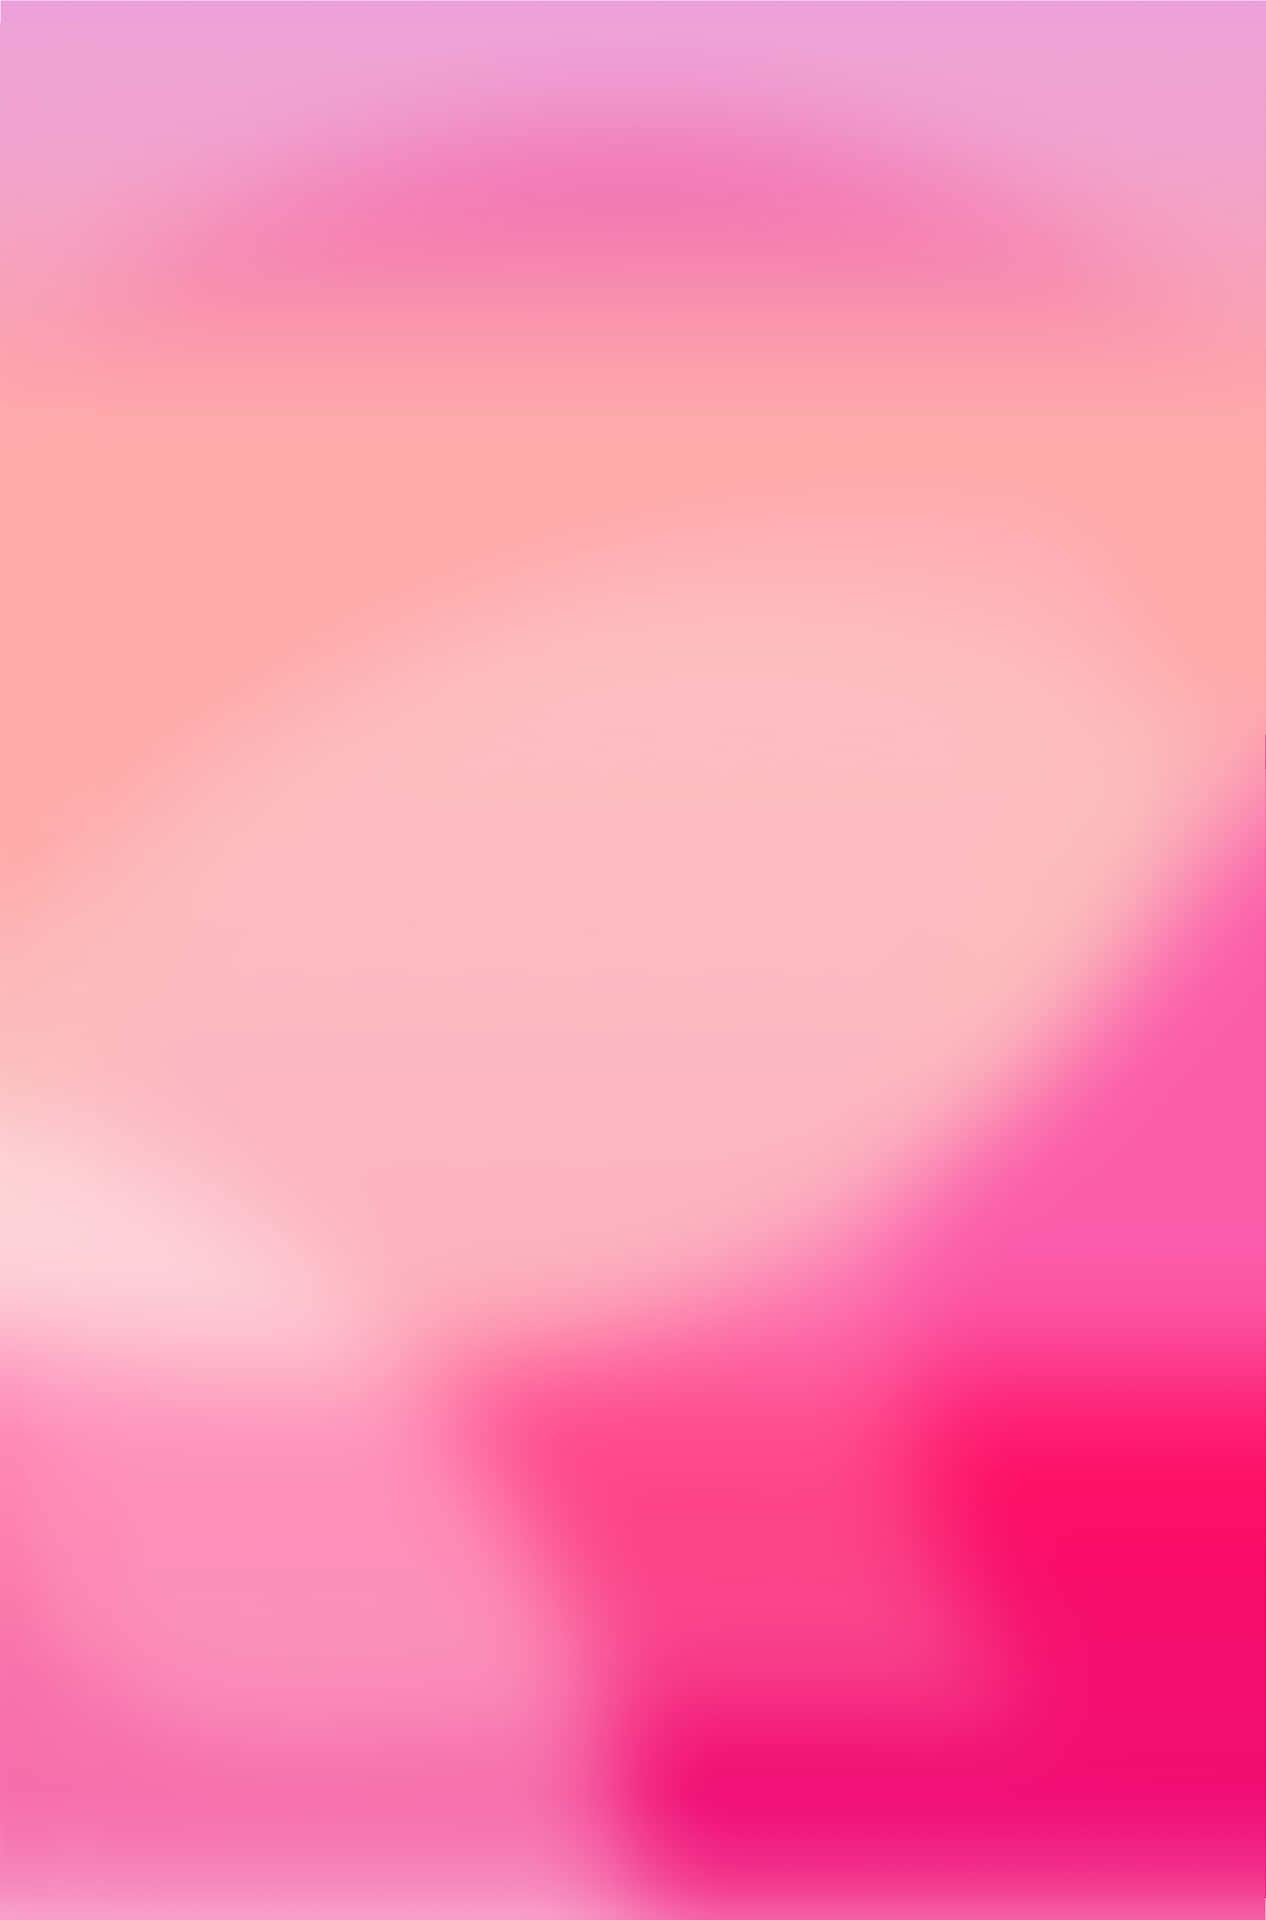 Soft Pink Wall Texture